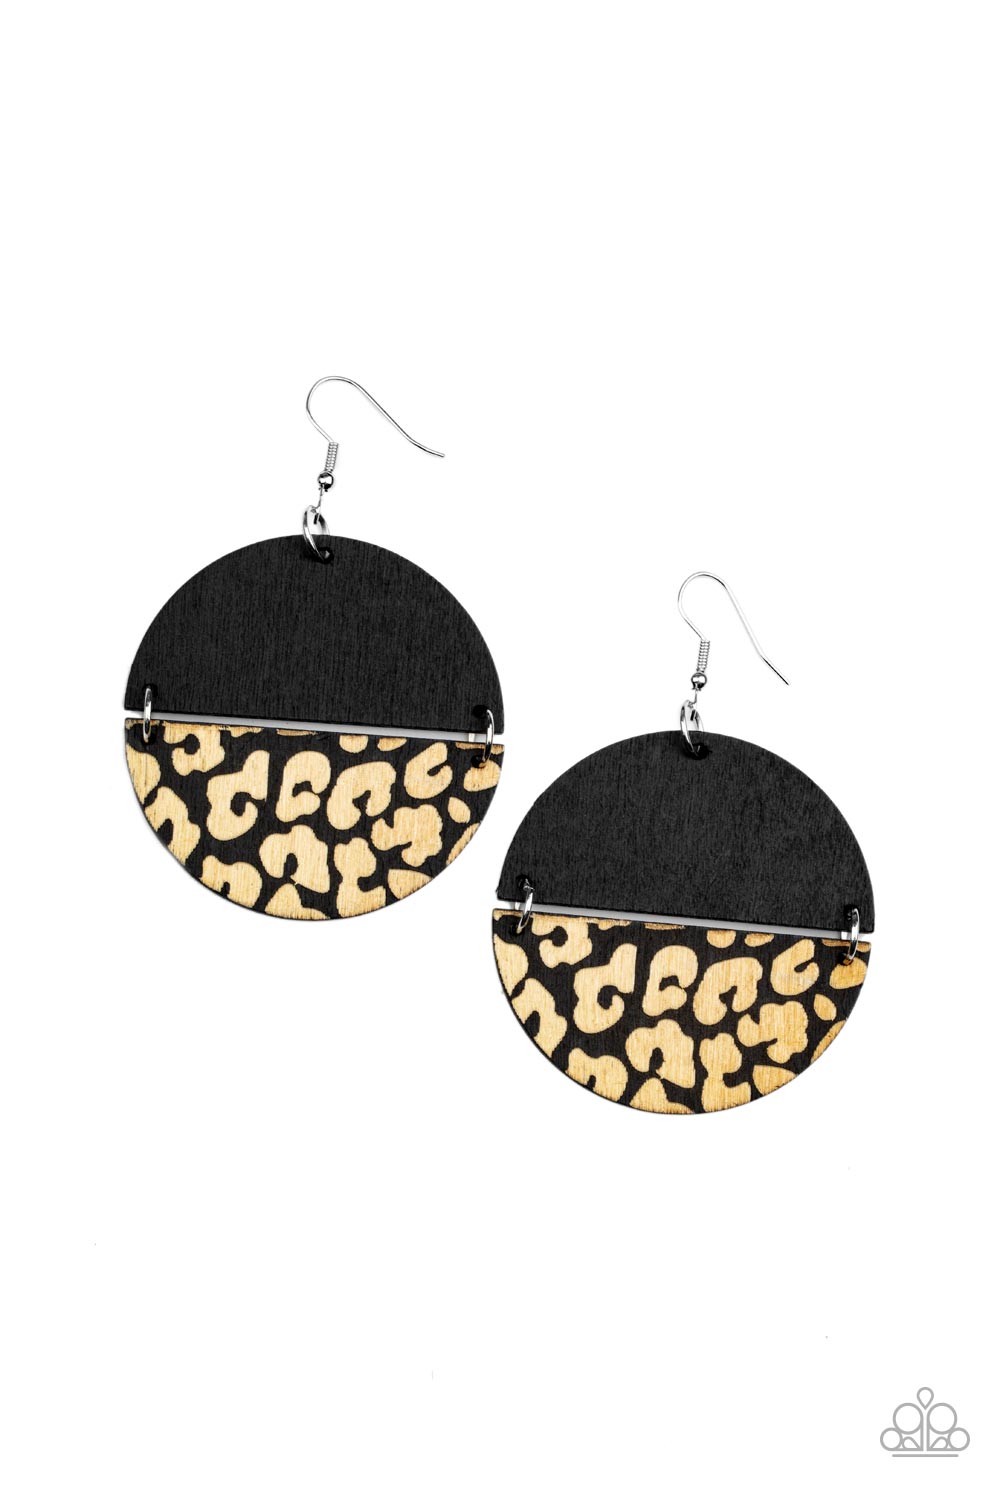 Jungle Catwalk Black Wood Cheetah Print Earrings - Paparazzi Accessories- lightbox - CarasShop.com - $5 Jewelry by Cara Jewels